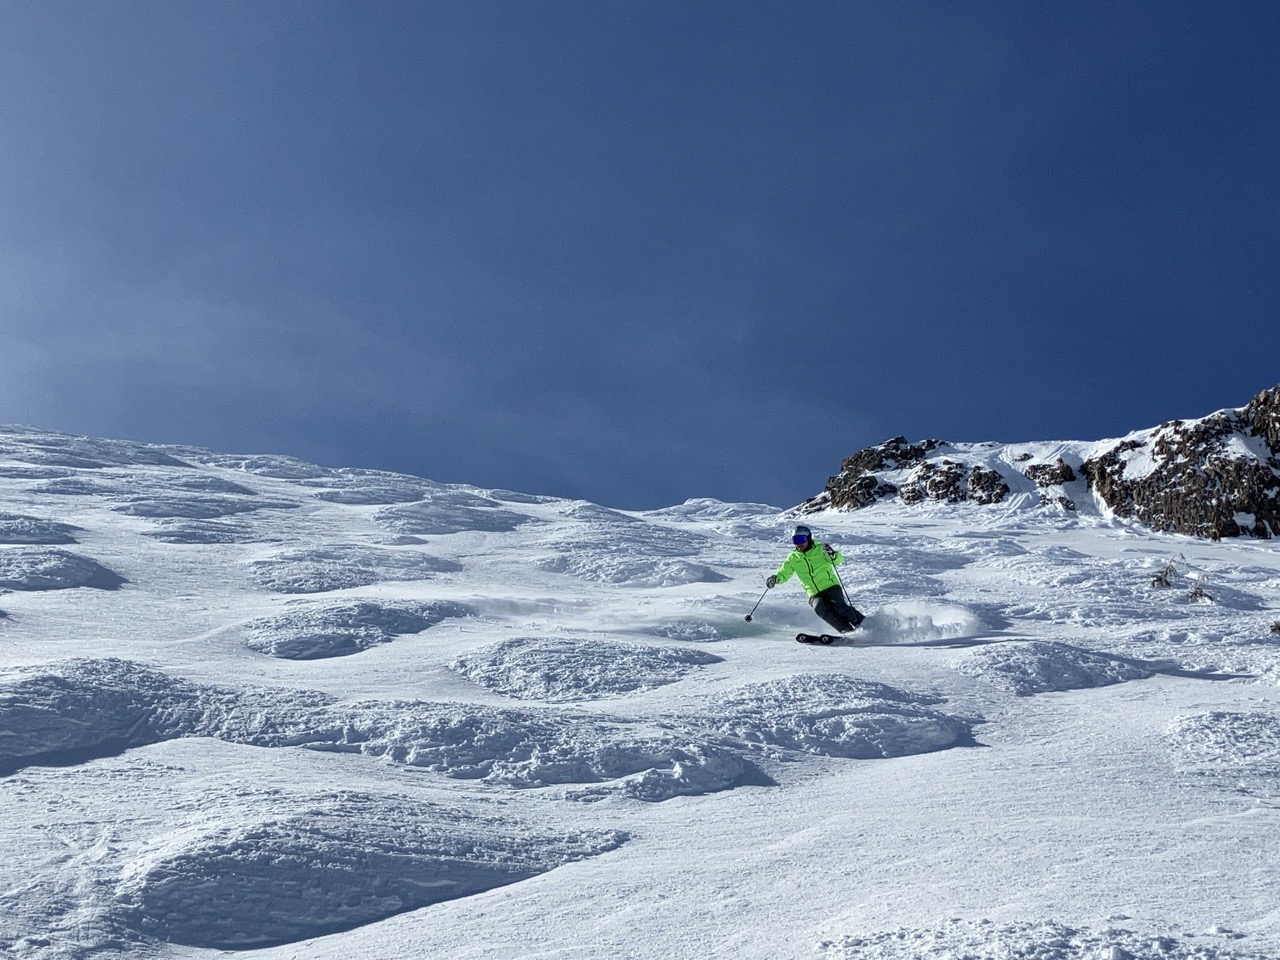 skier coming down snowy moguls